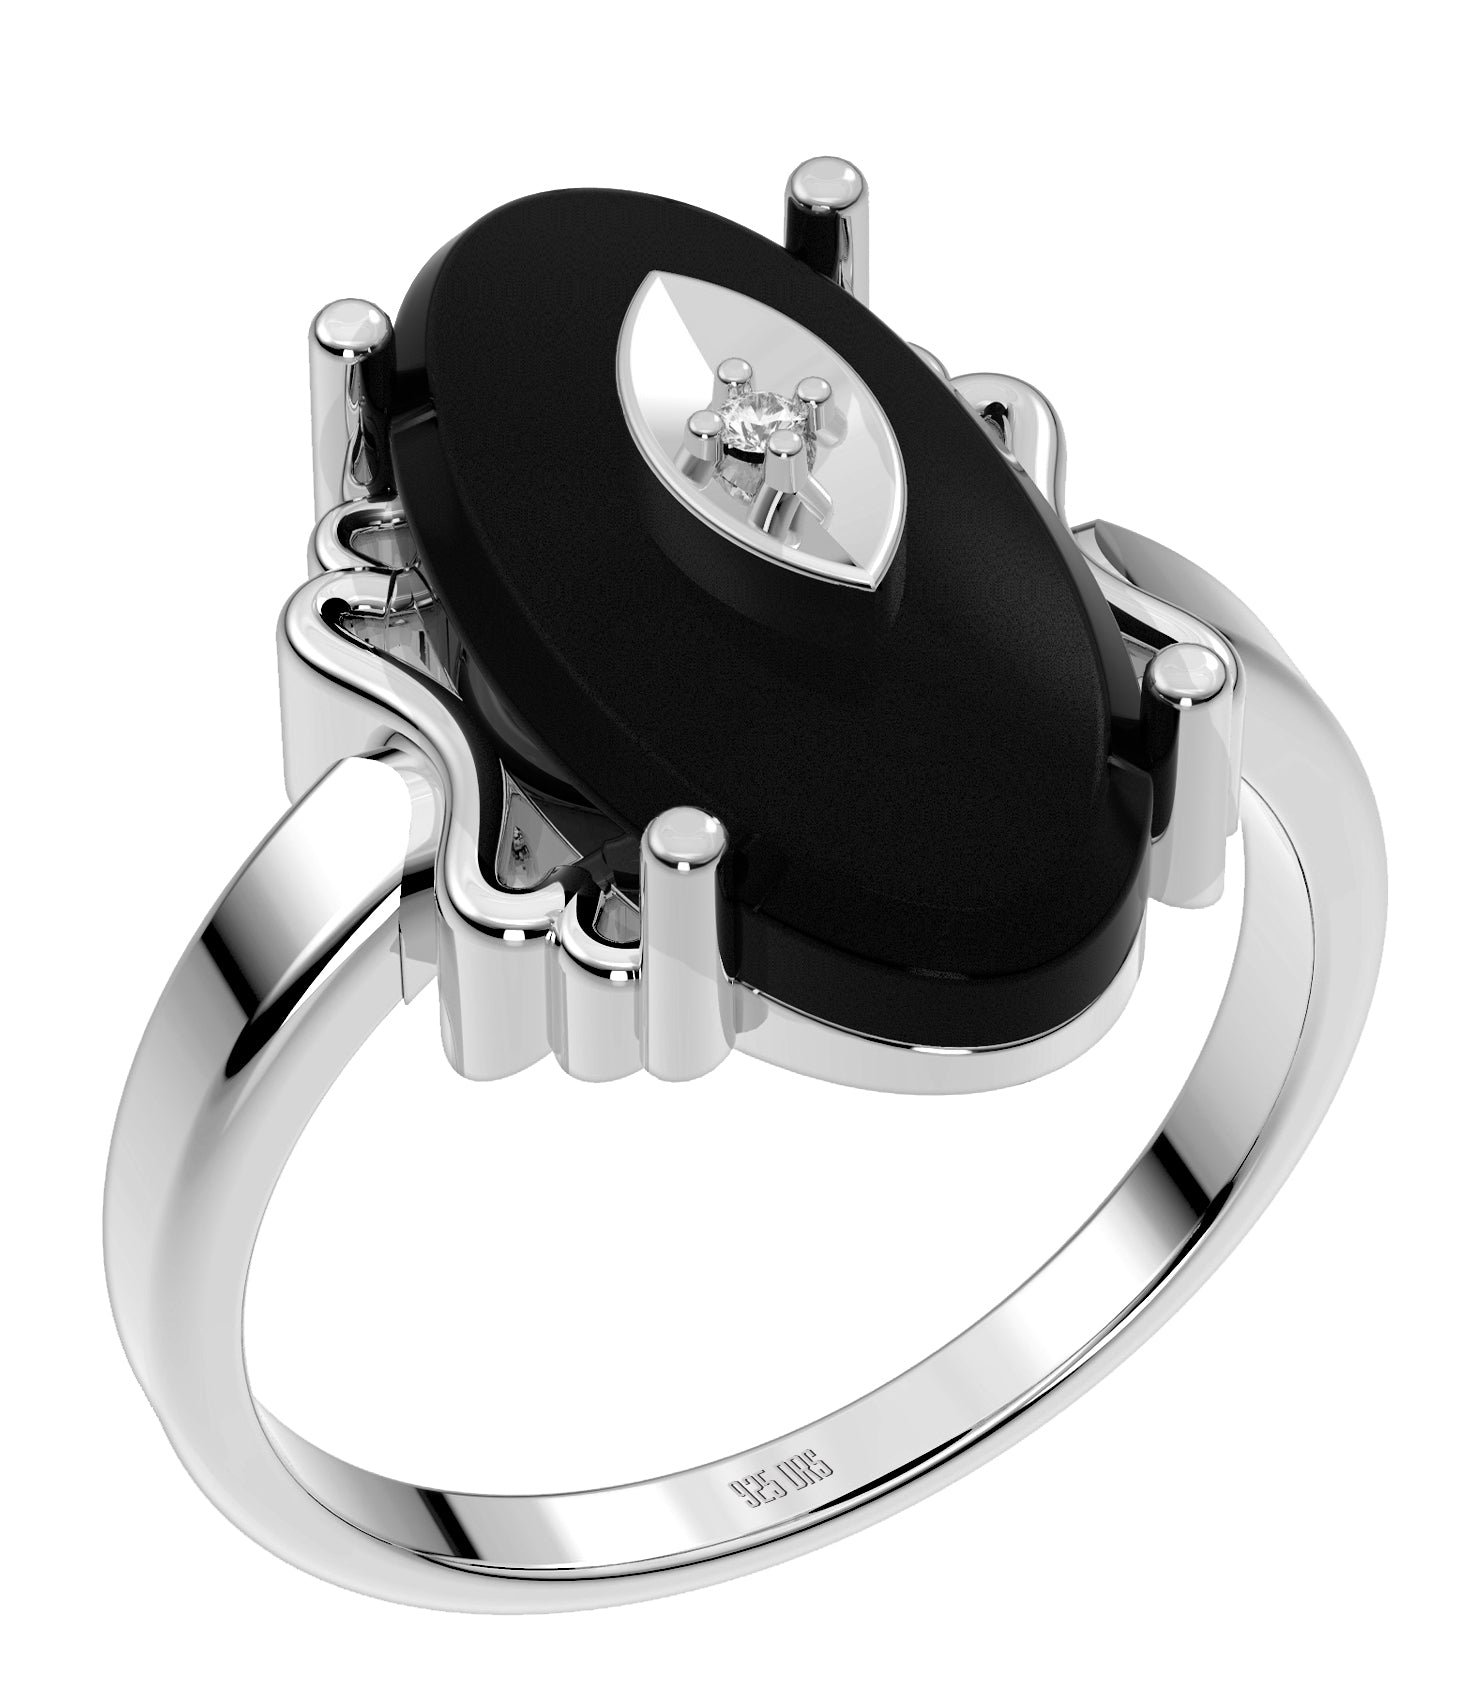 Ladies 925 Sterling Silver Genuine Oval Black Onyx Diamond Ring